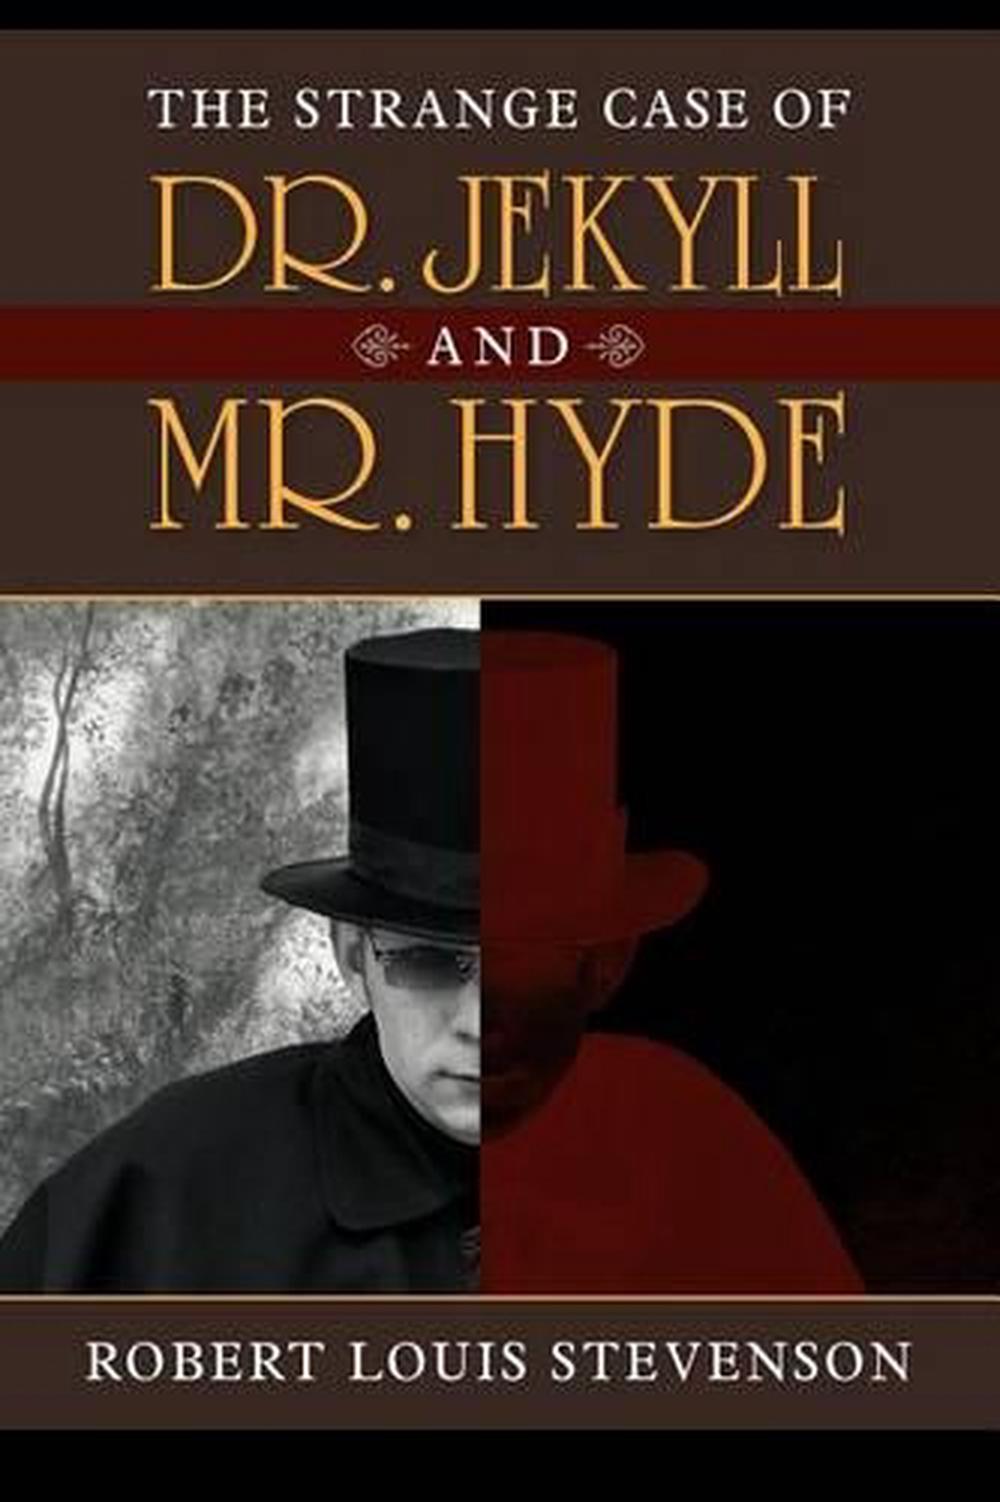 The Strange Case of Dr. Jekyll and Mr. Hyde by Robert Louis Stevenson (English) 9781619490079 eBay